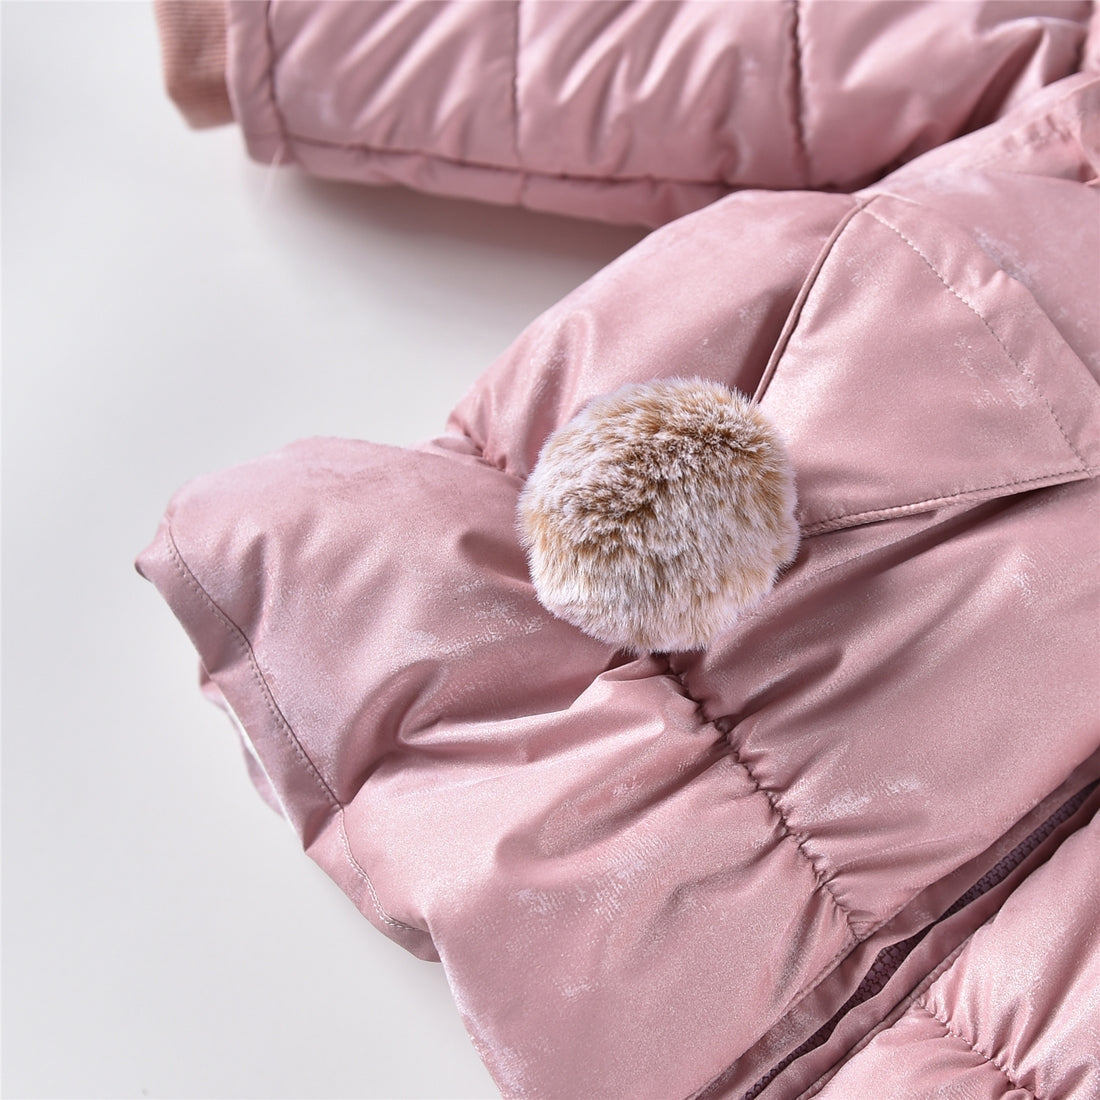 Warm Winter Bristol Coat | Pink Size 12-24m